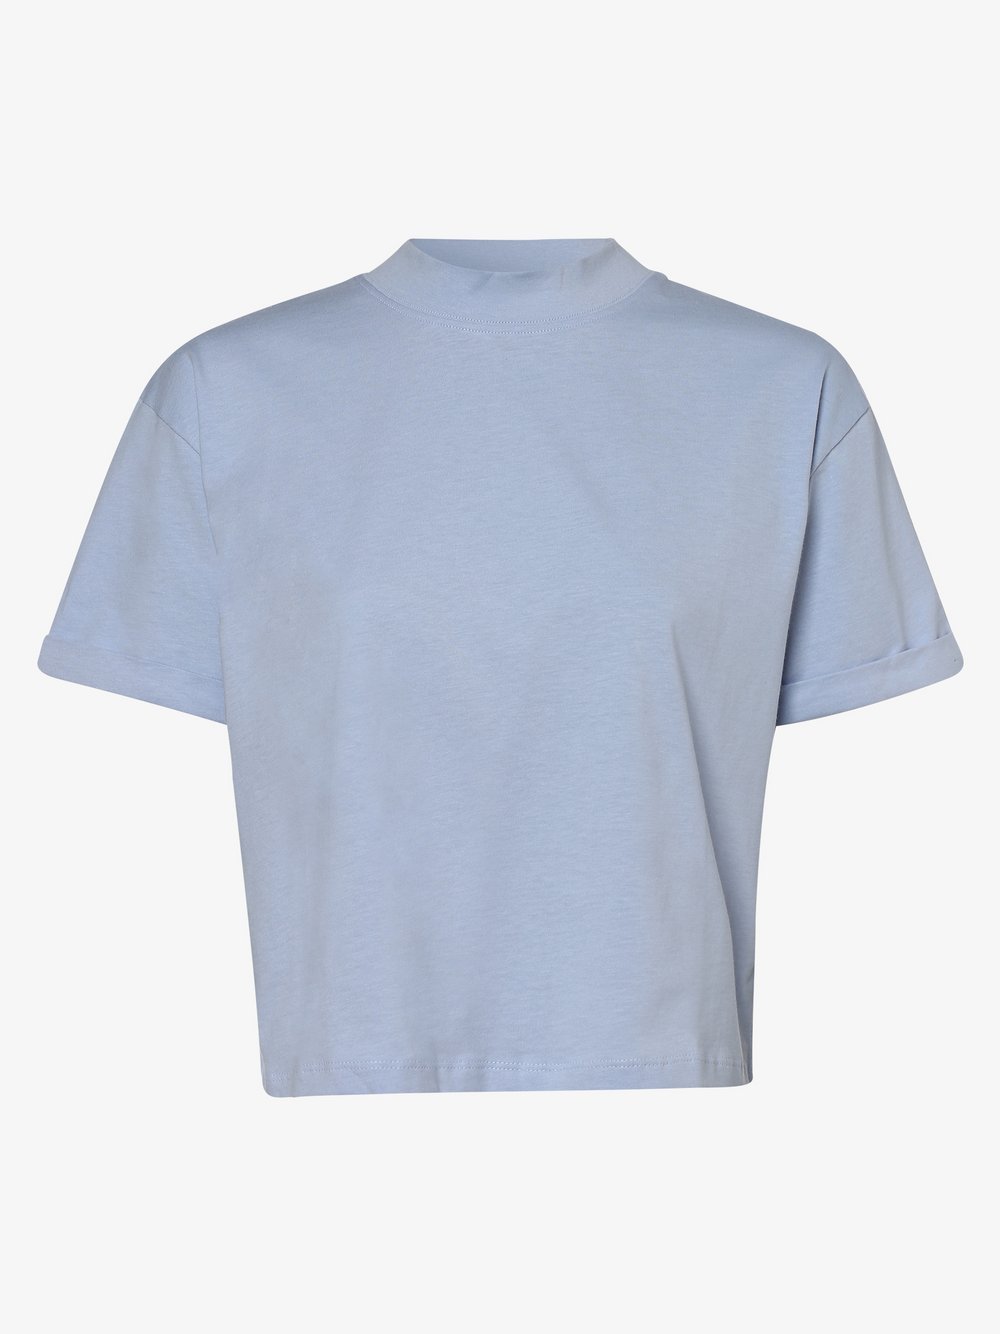 EDITED - T-shirt damski – Louna, niebieski